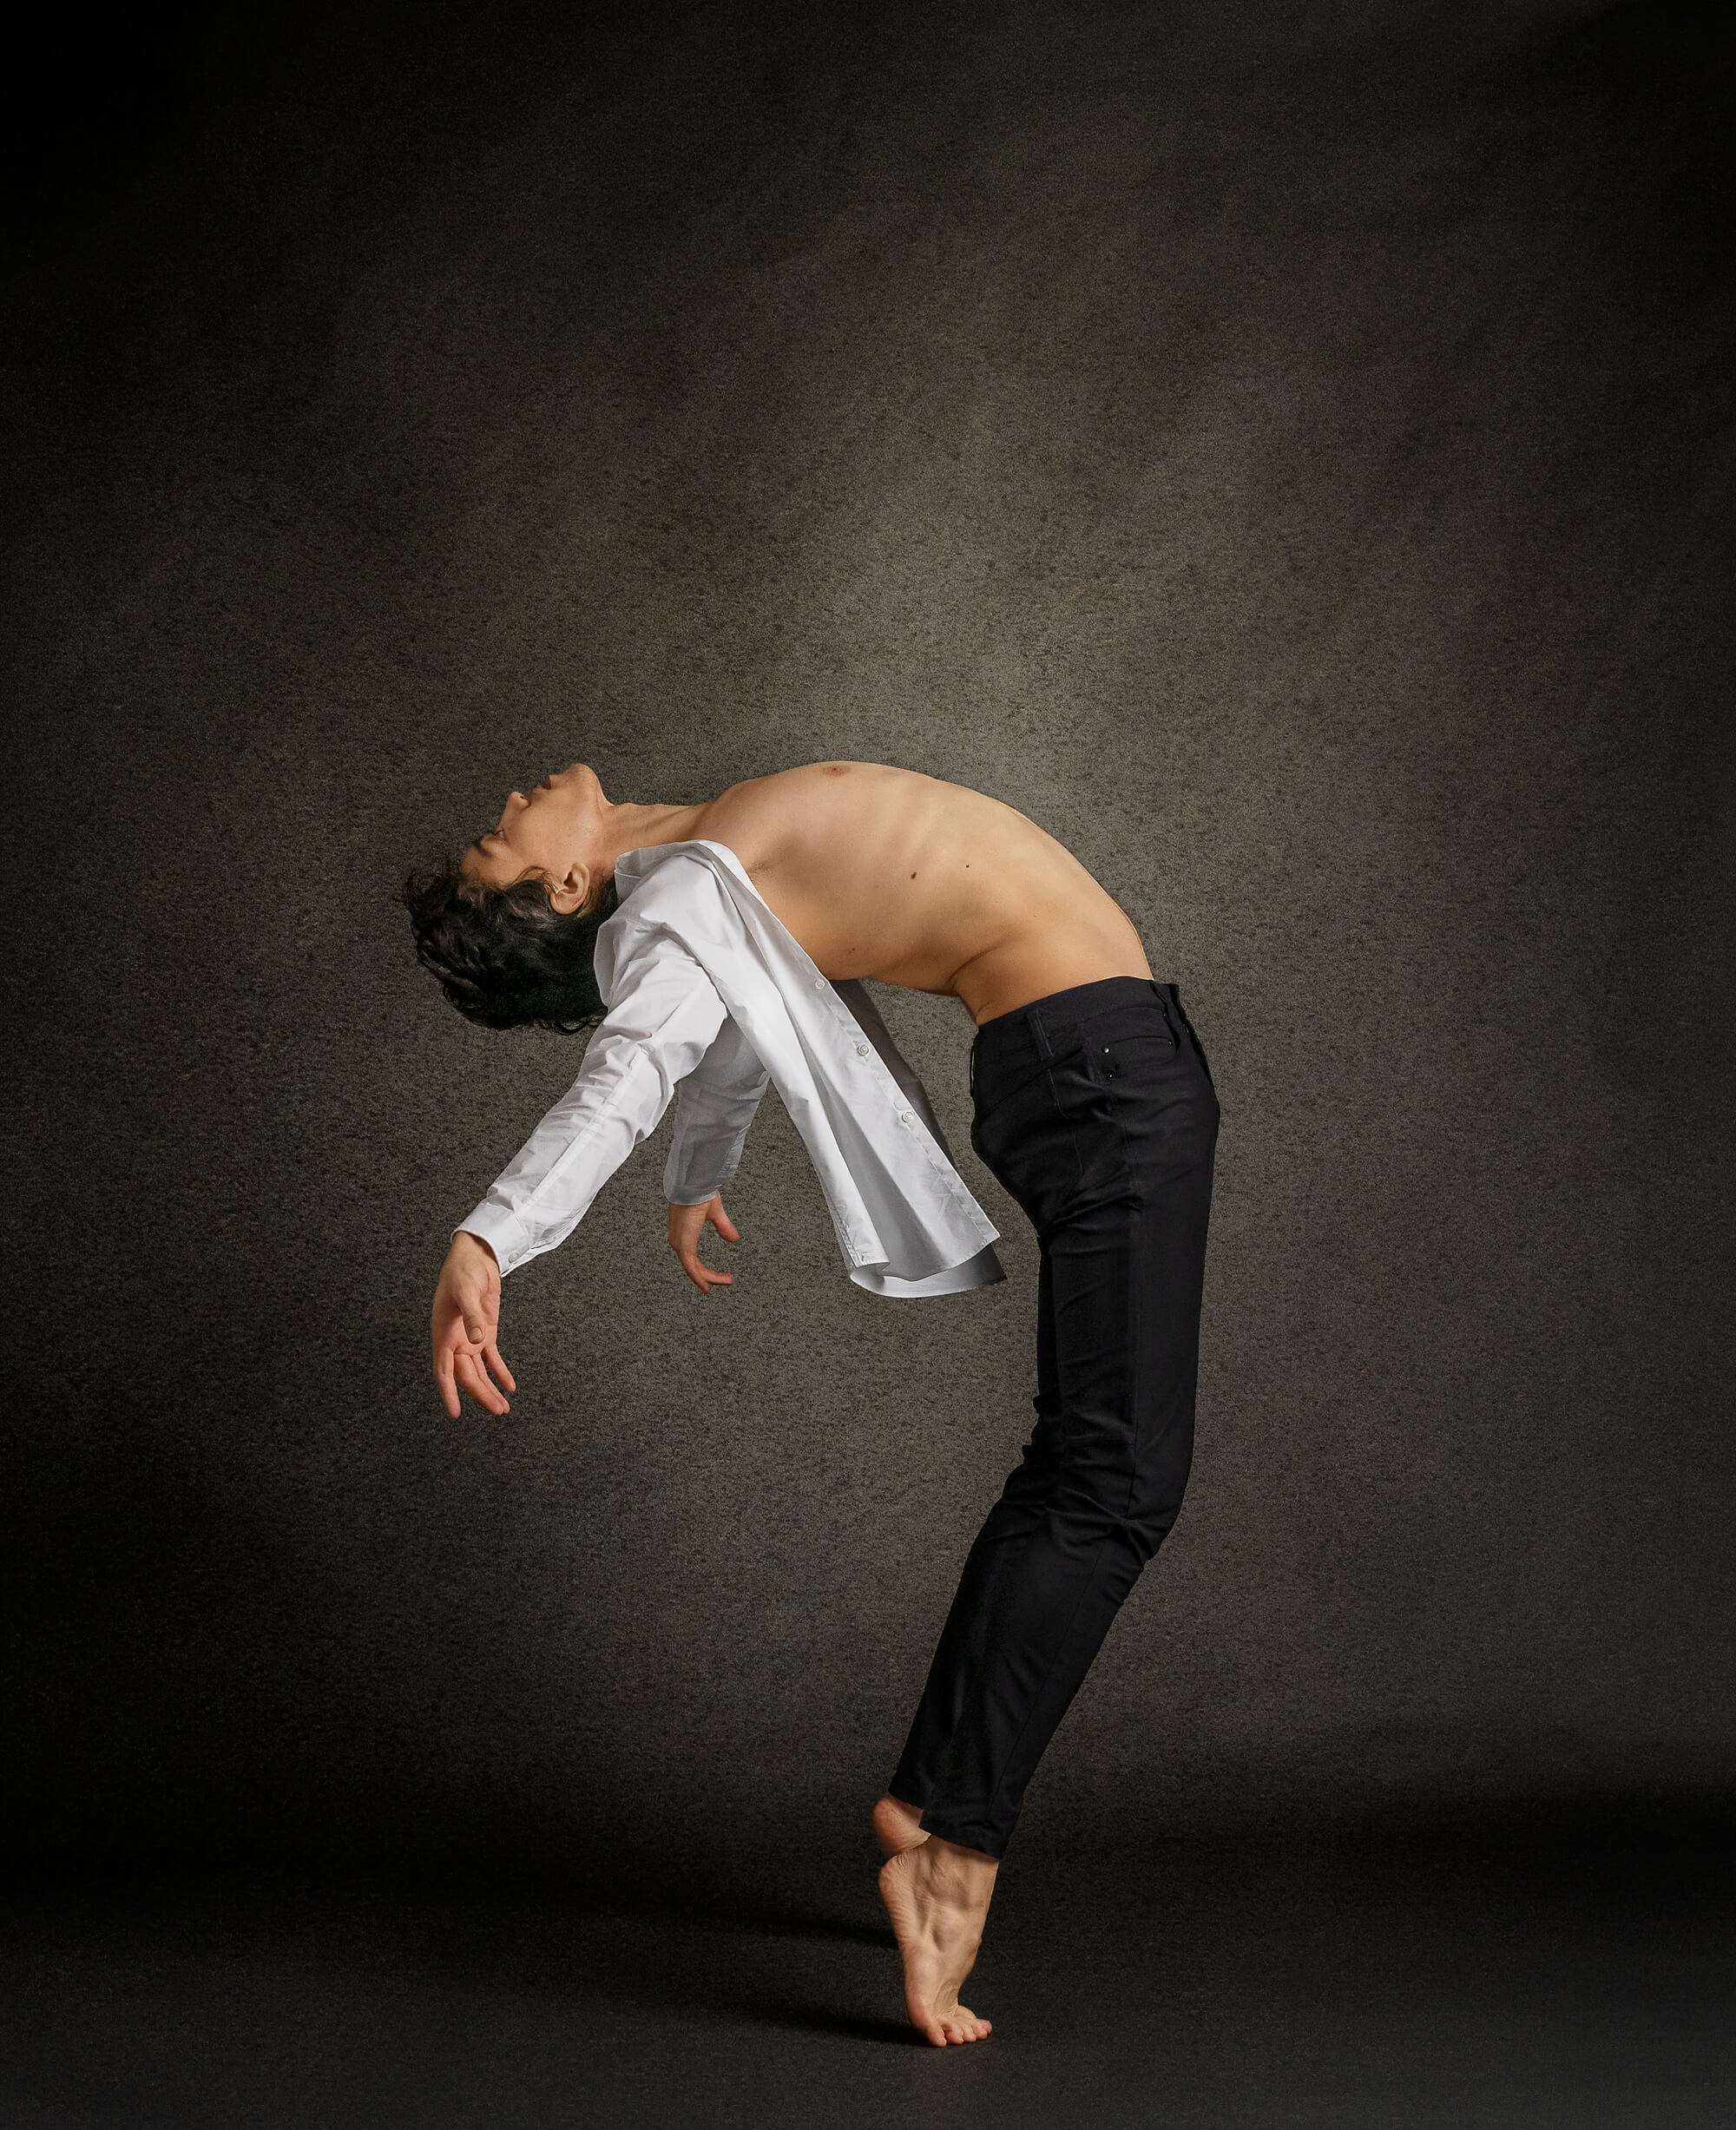 Dancer posing throwing arms back in CA photo studio